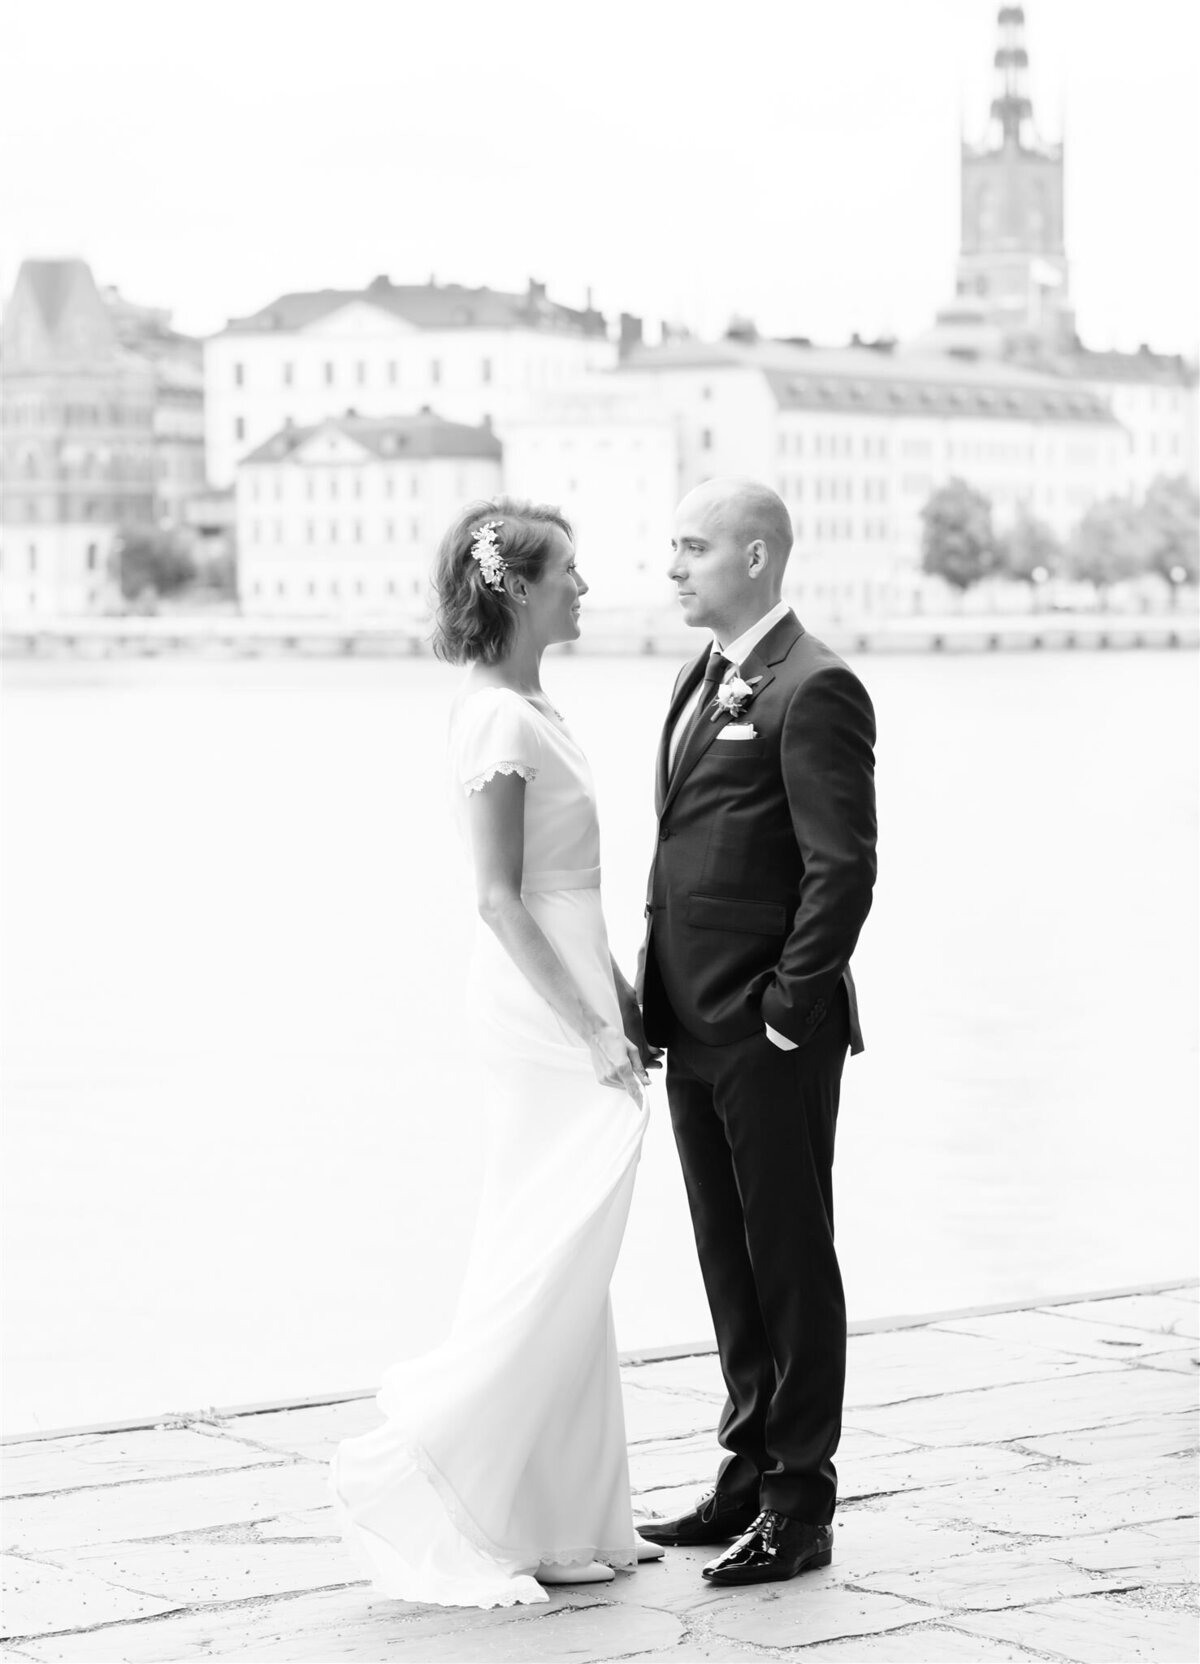 Destination Wedding Photographer in Stockholm helloalora Anna Lundgren wedding at Stockholm city hall portraits